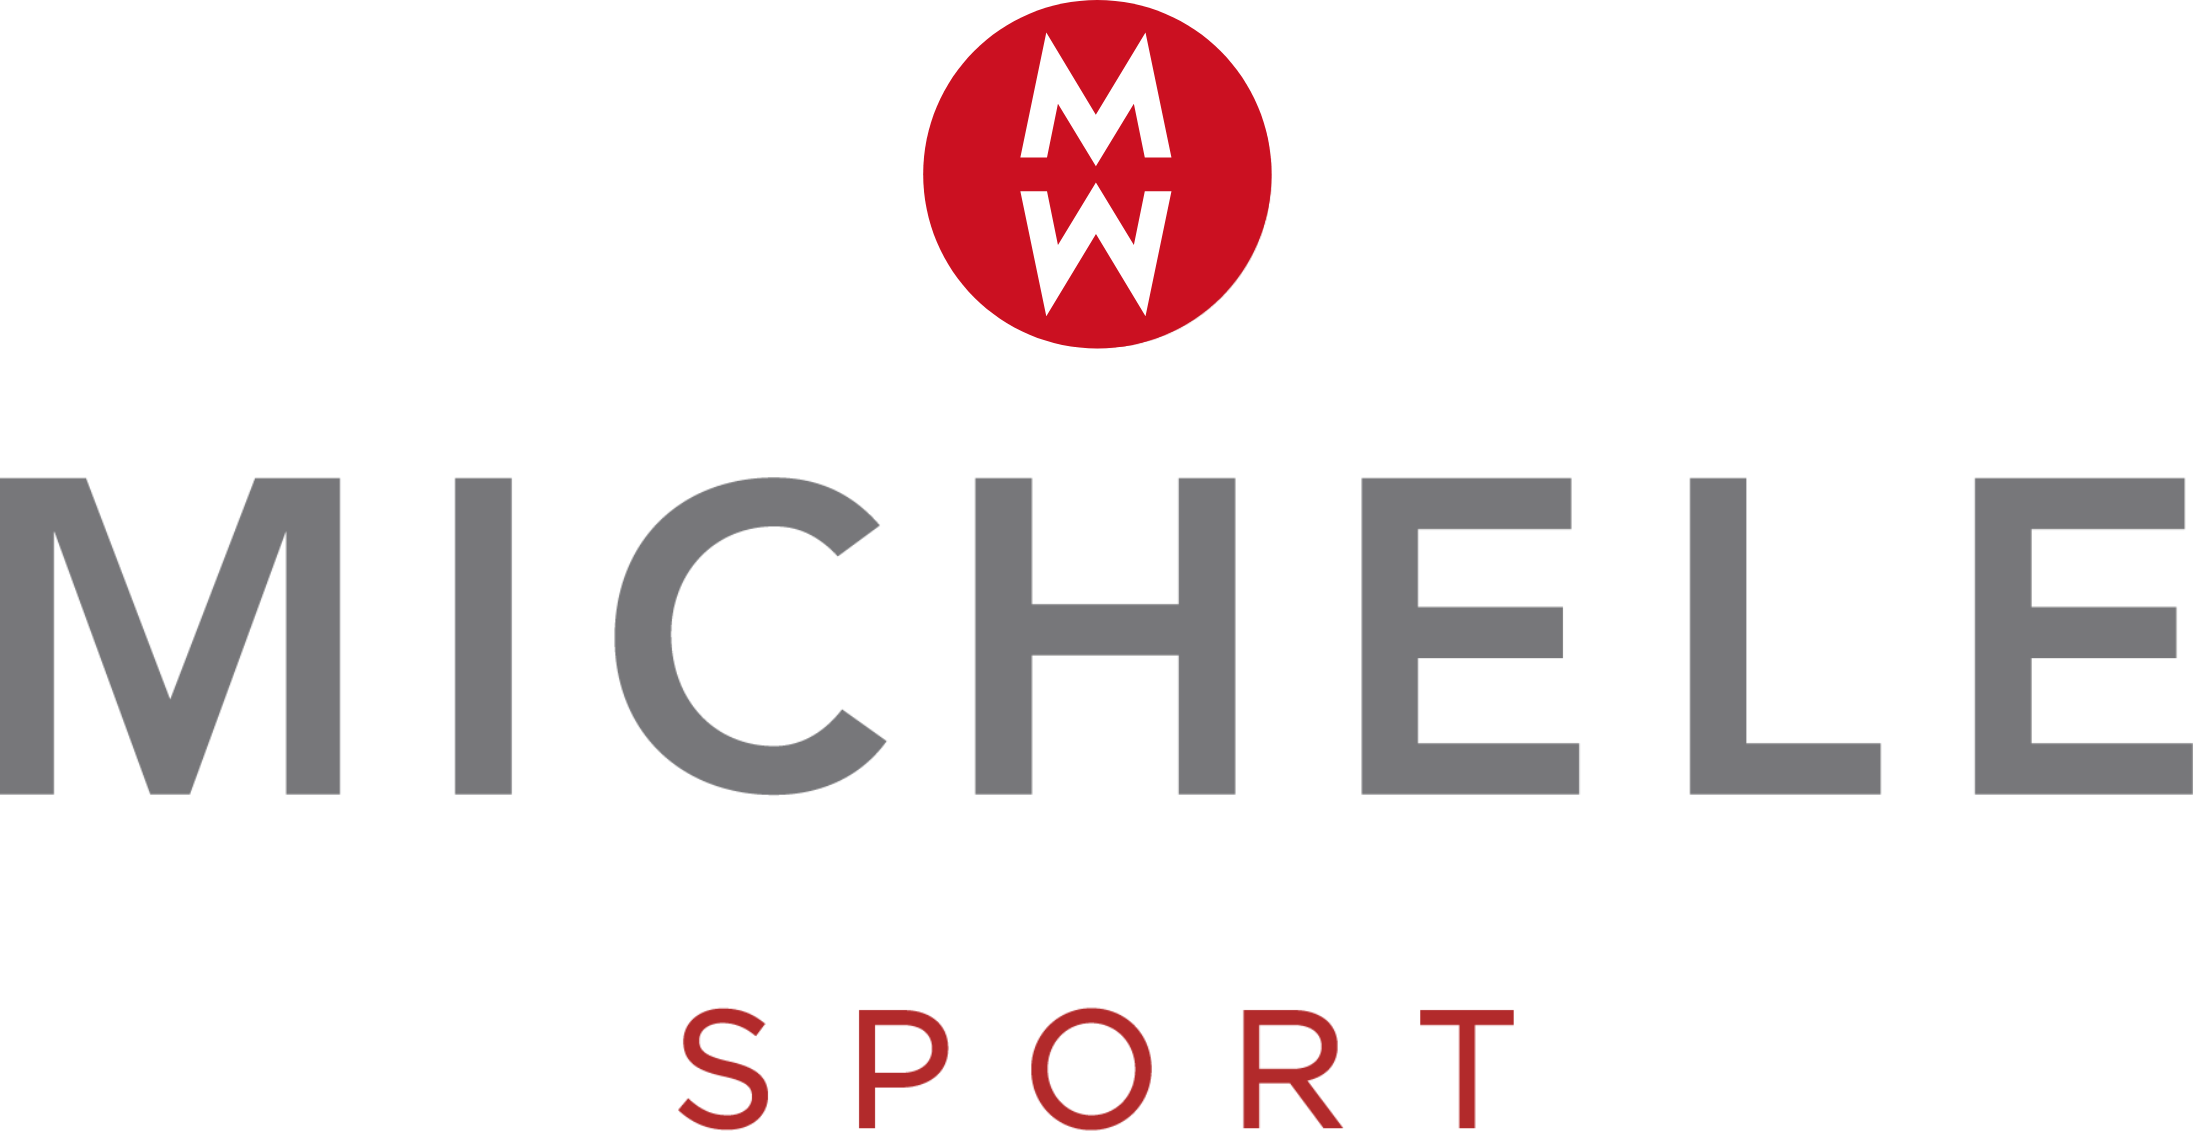 Michele Logo